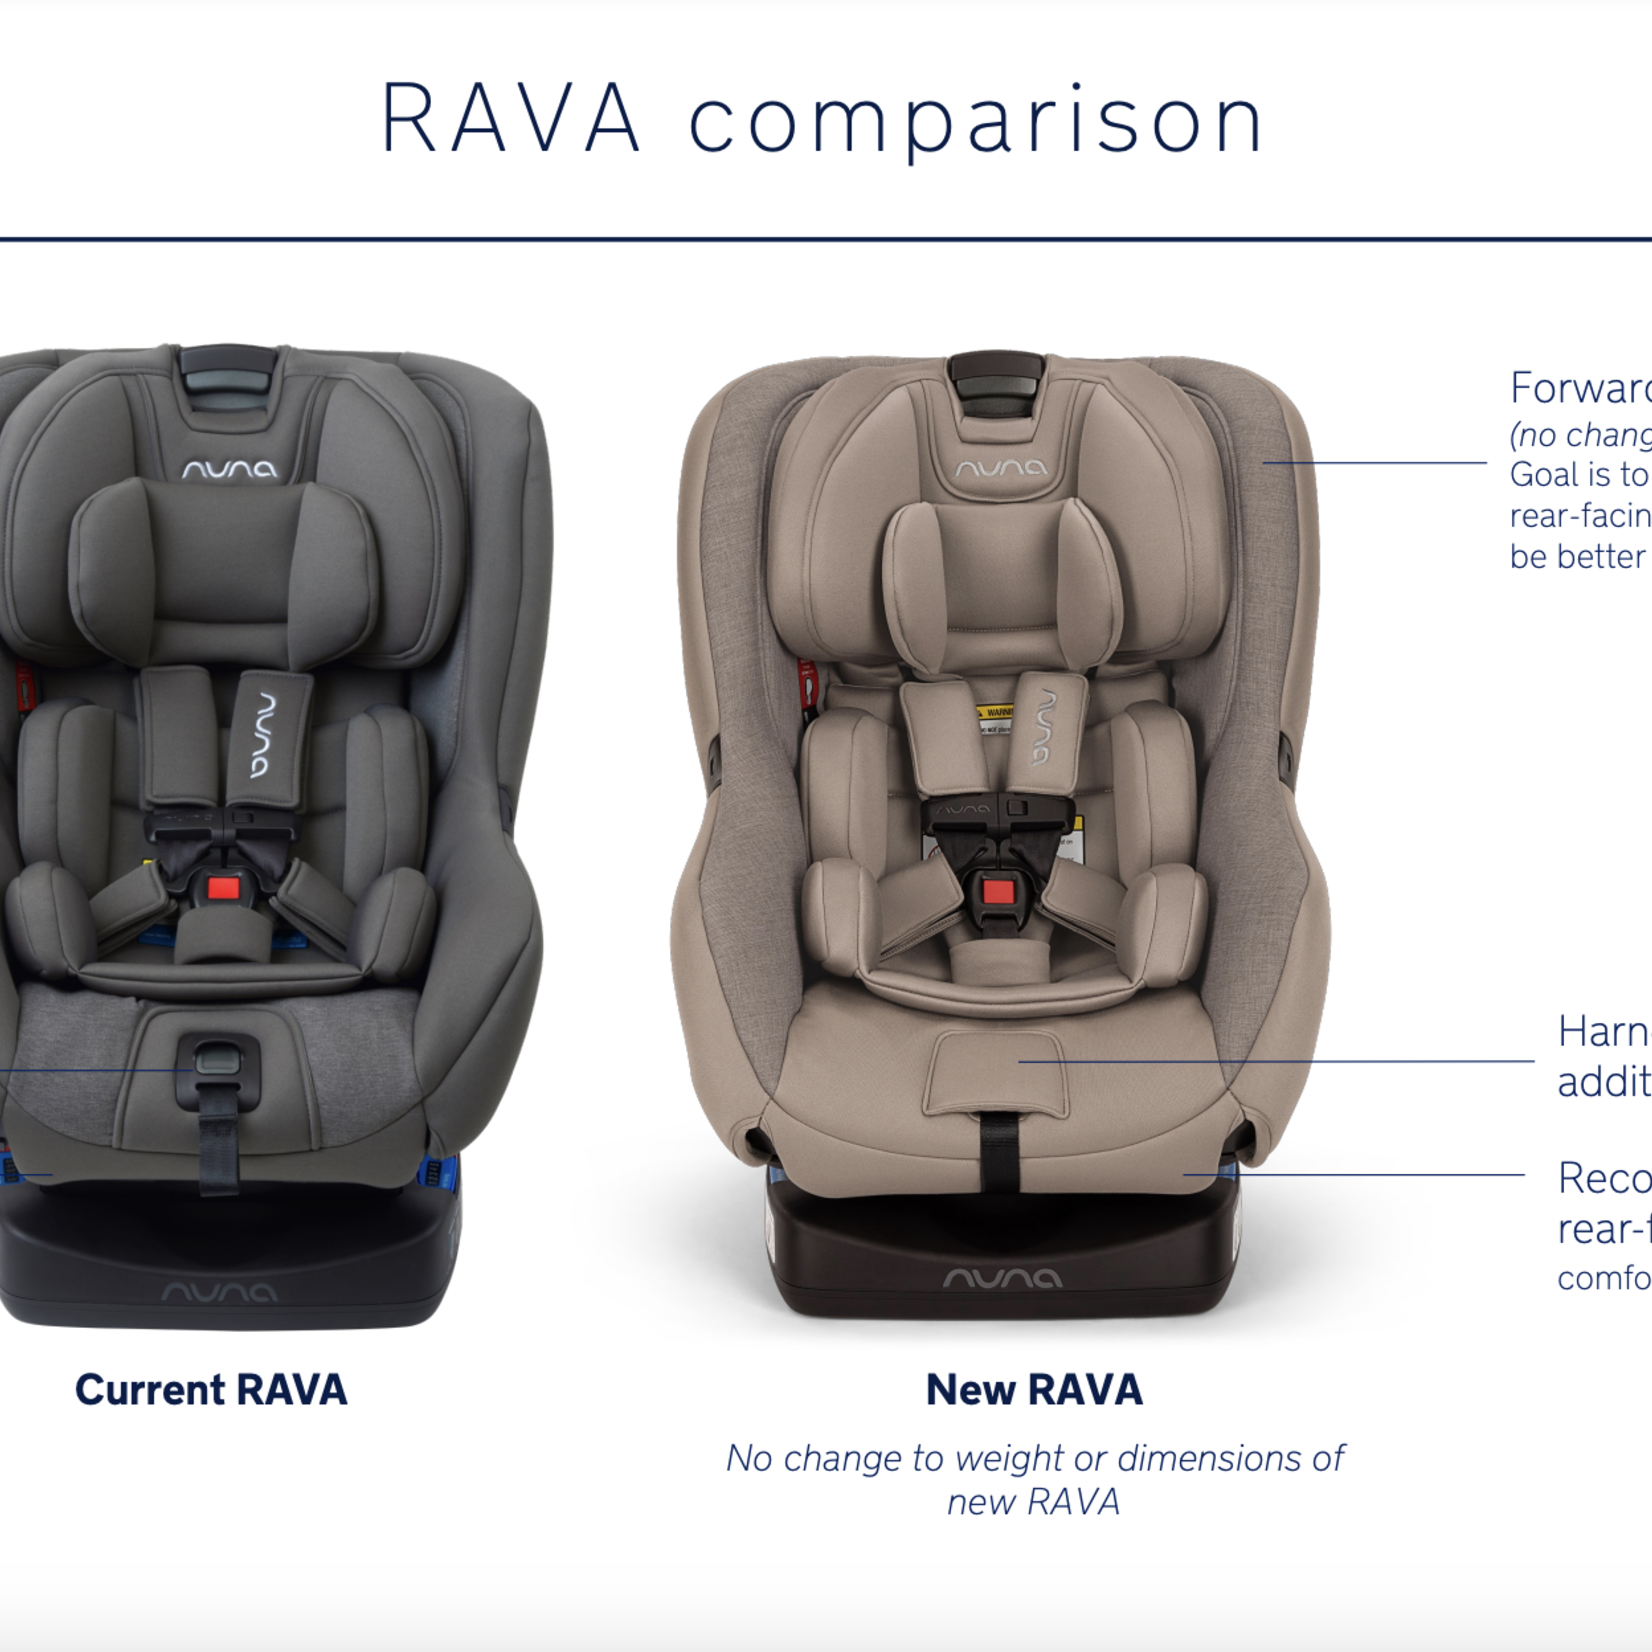 Nuna Rava Convertible Car Seat Thistle